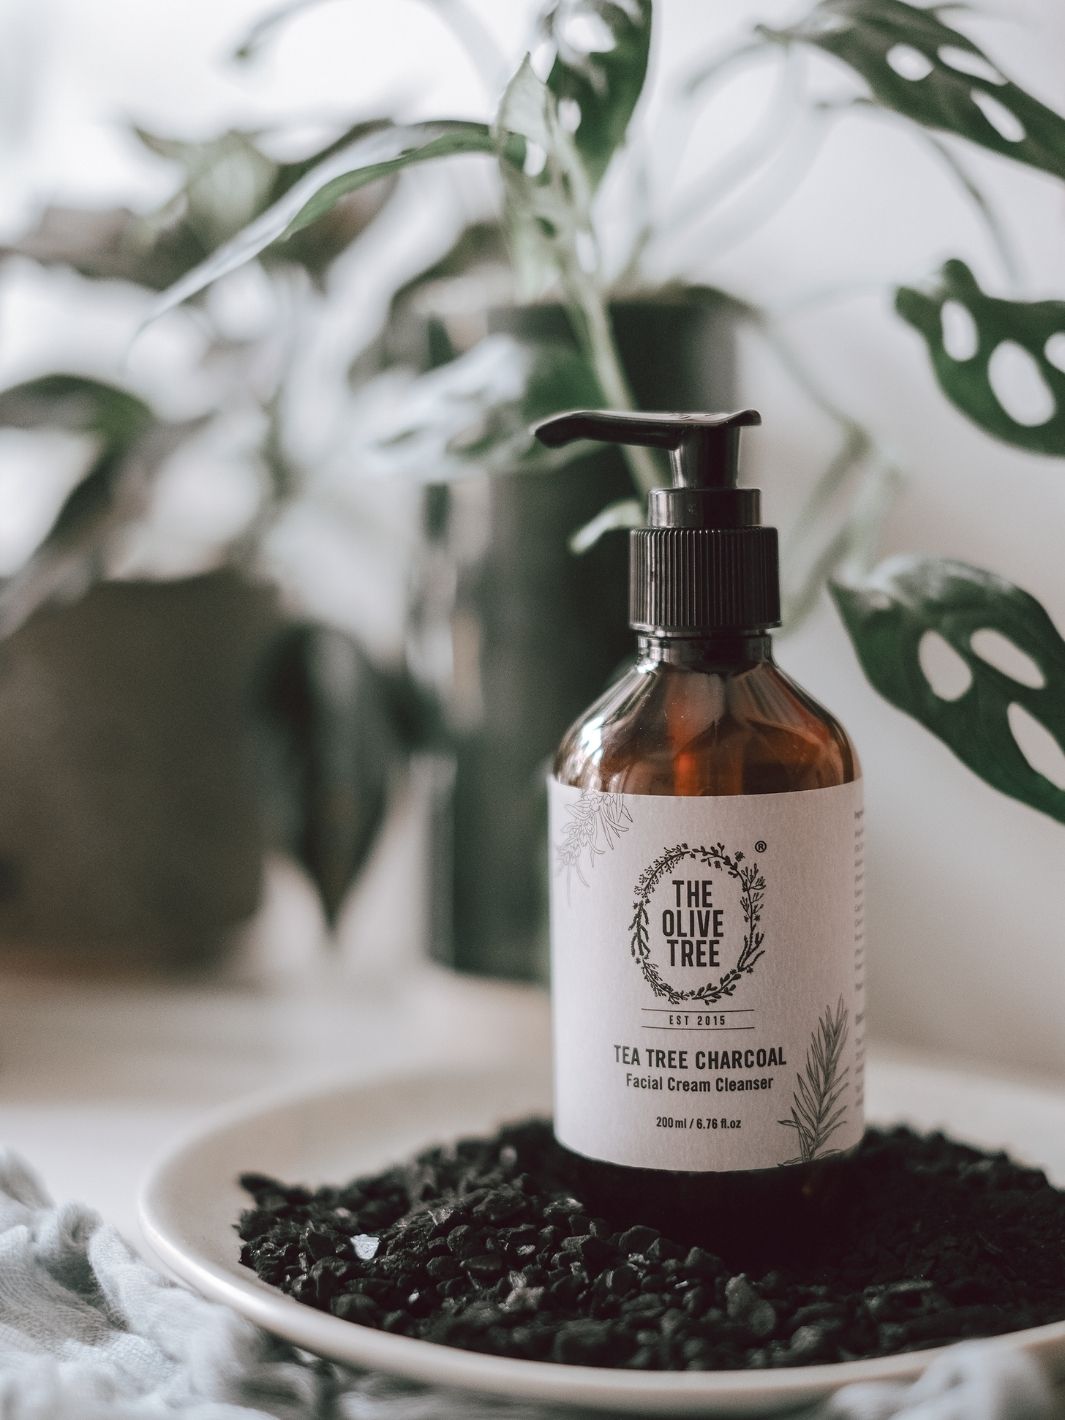 Oily & Anti Dandruff Tea Tree Charcoal Shampoo